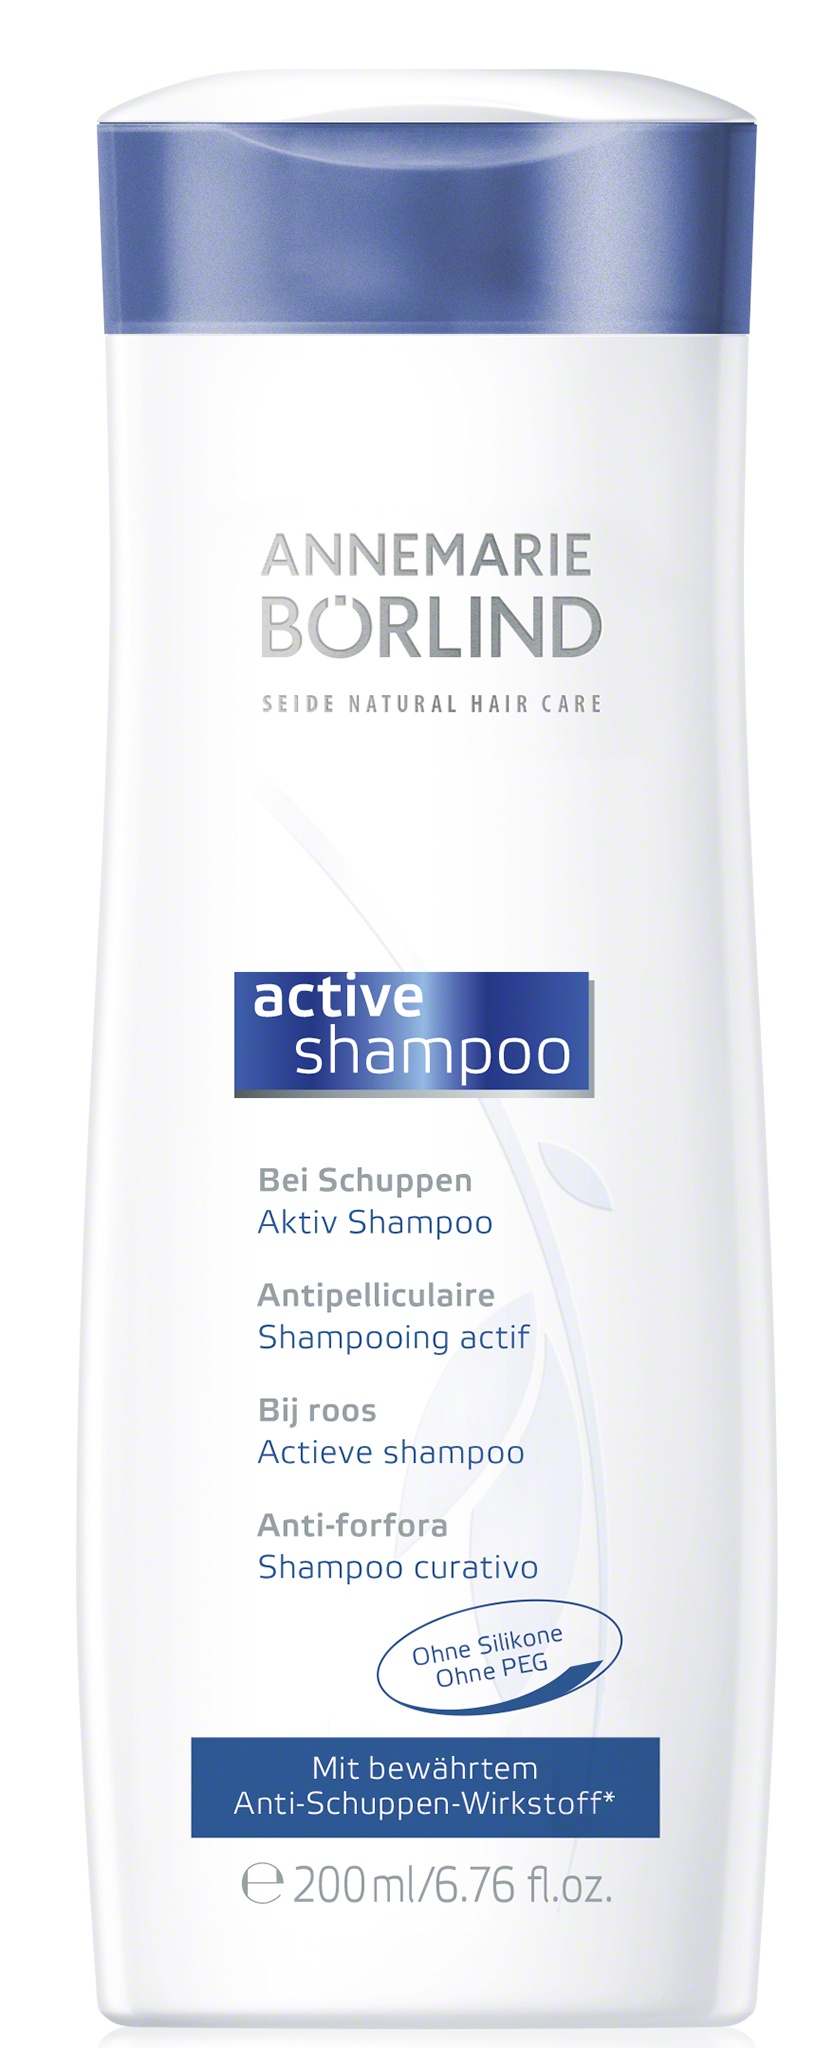 Annemarie Börlind Seideaktiv Shampoo